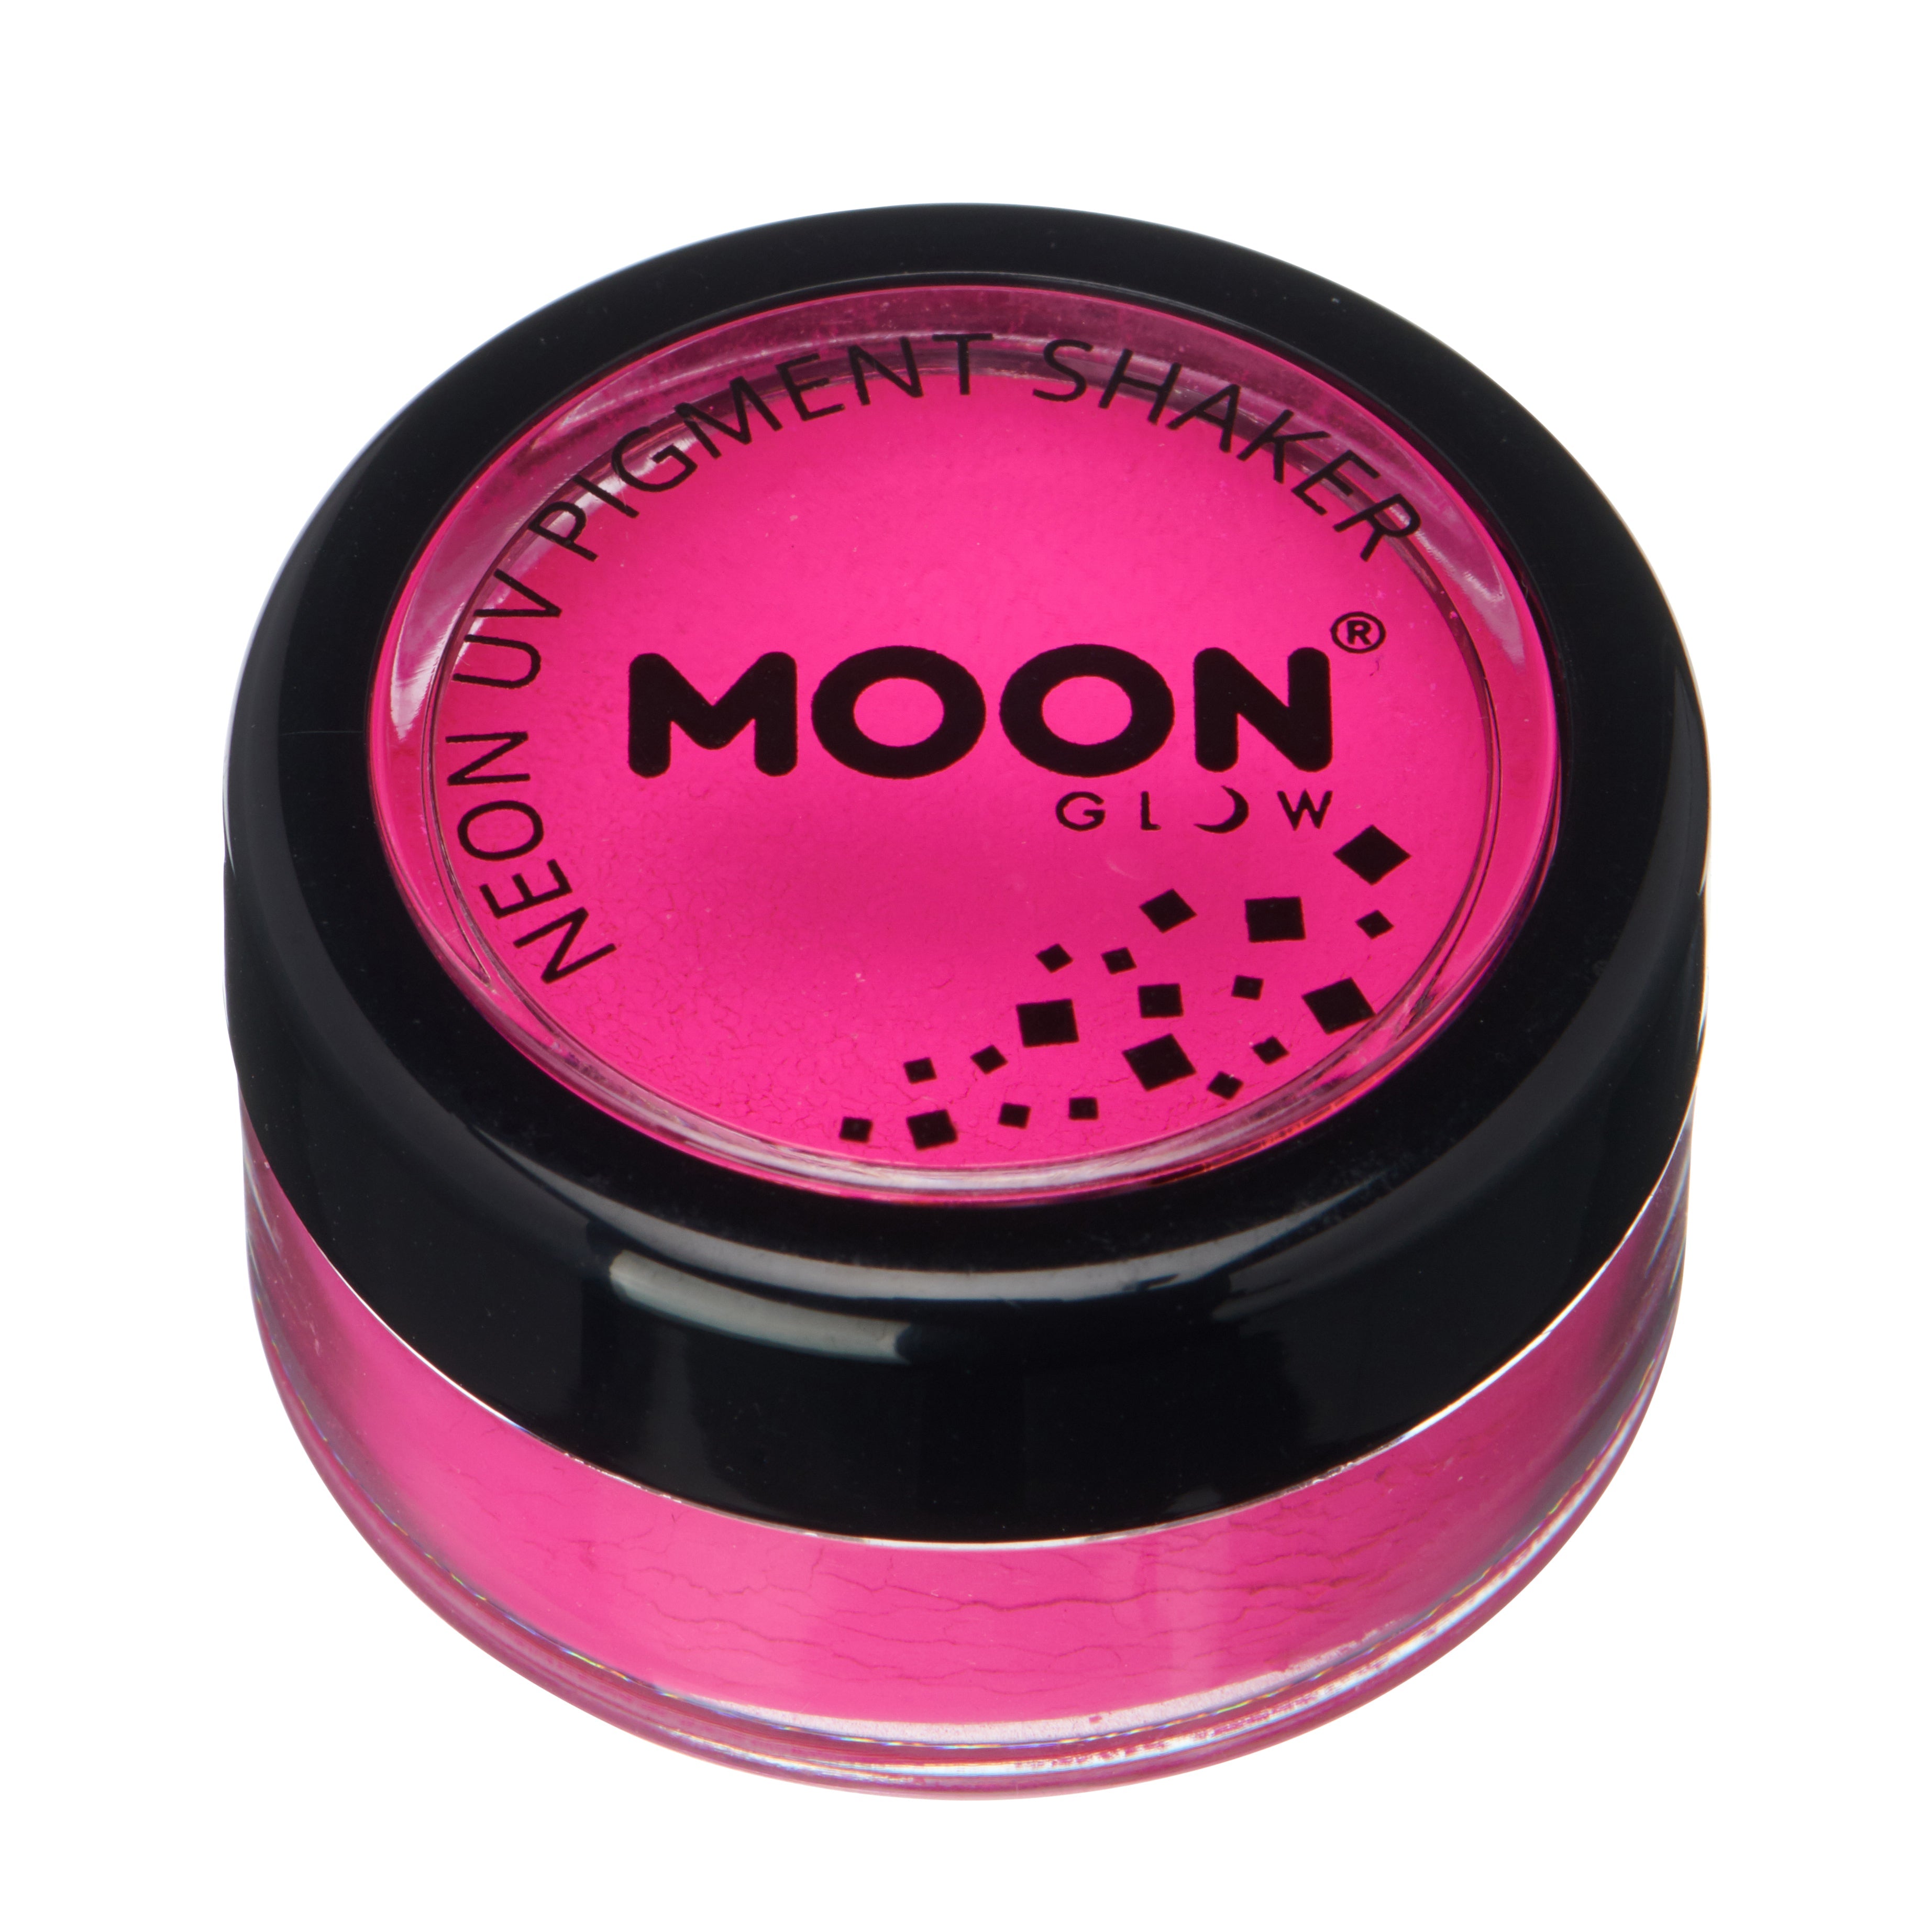 Intense Pink - Neon UV Glow Blacklight Pigment Shaker, 3g. Cosmetically certified, FDA & Health Canada compliant, cruelty free and vegan.